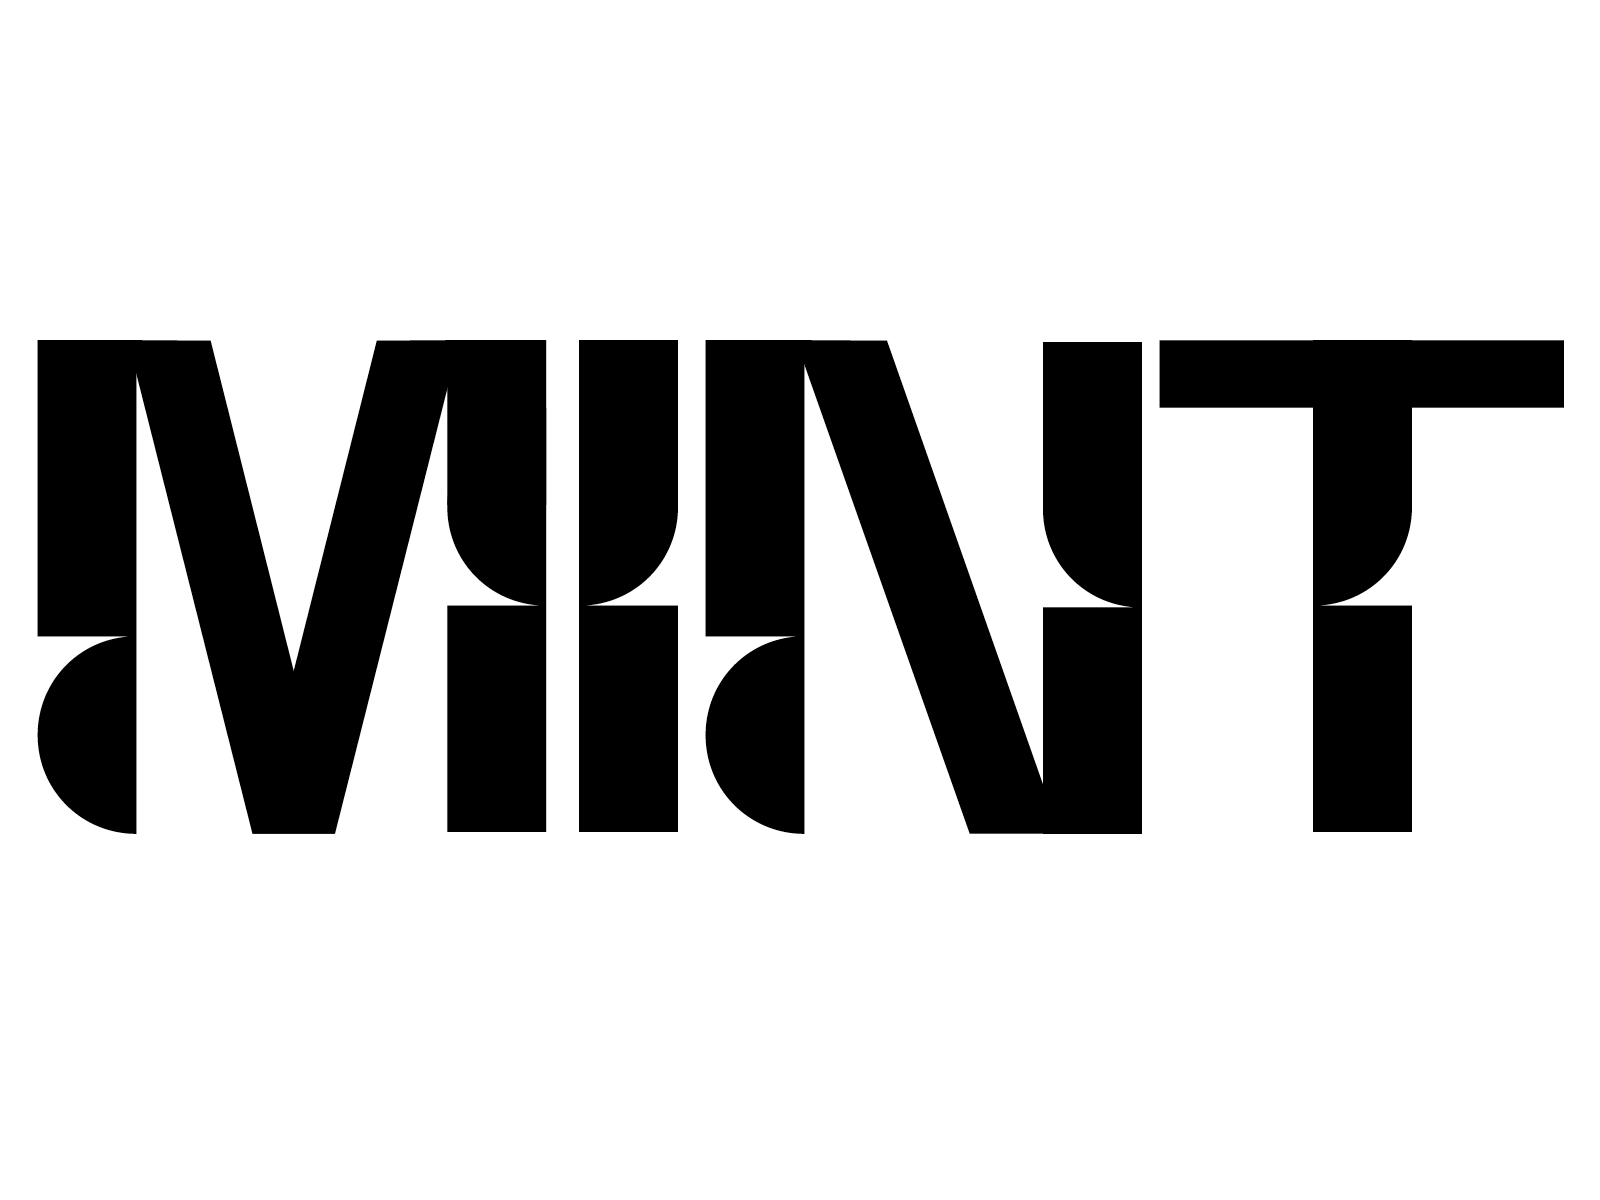 Modular typographic logo